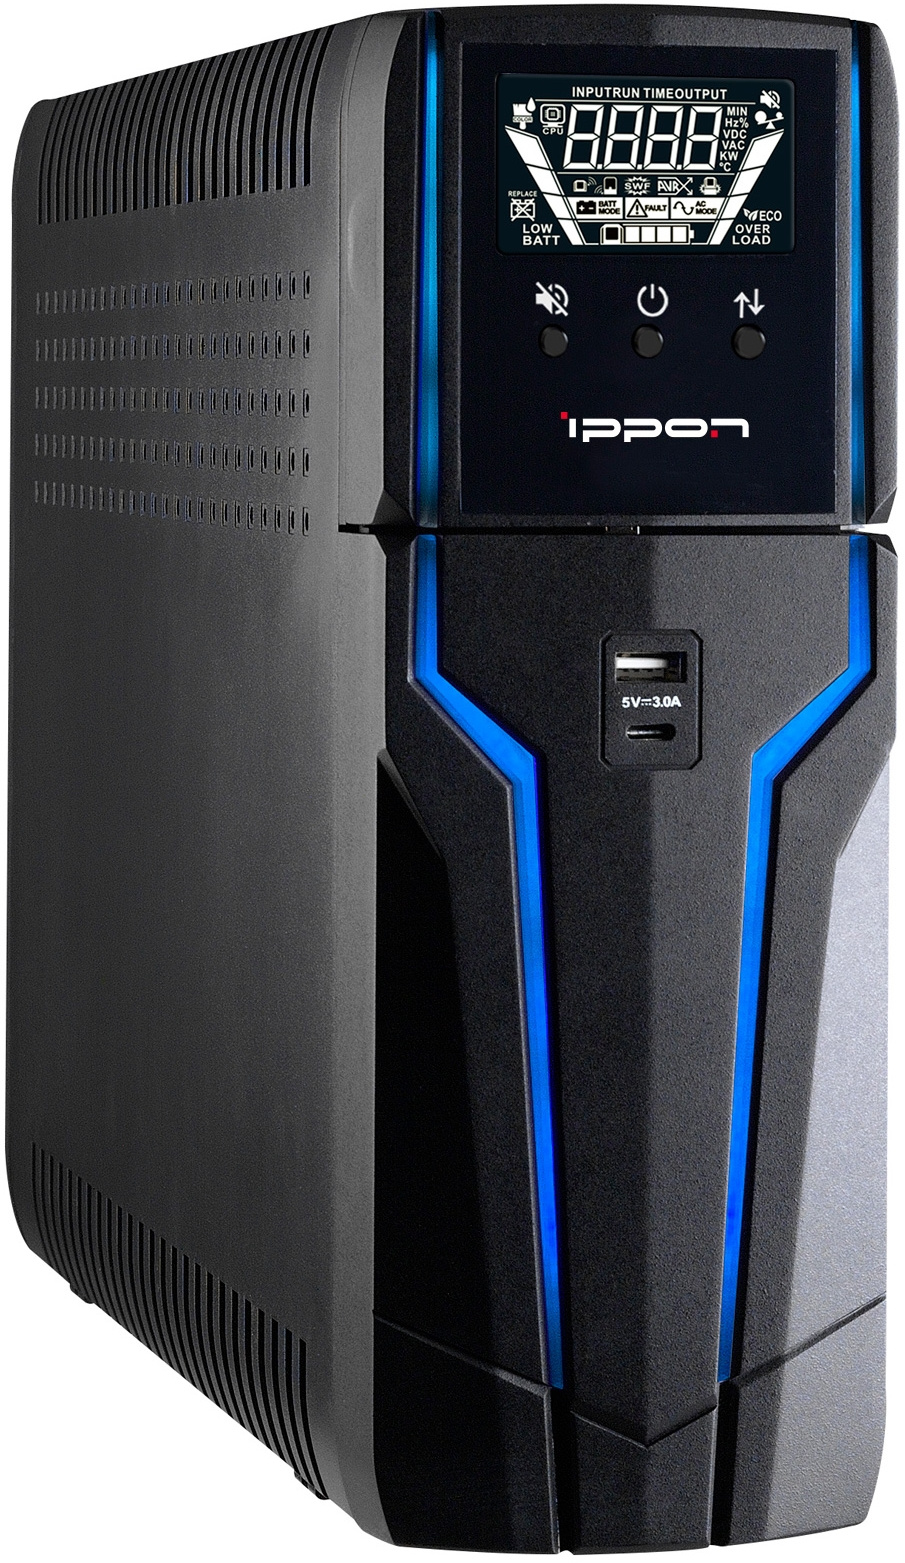 ИБП Ippon Game Power Pro 1000, 1000 В·А, 600 Вт, EURO, розеток - 2, USB, черный (1908308)